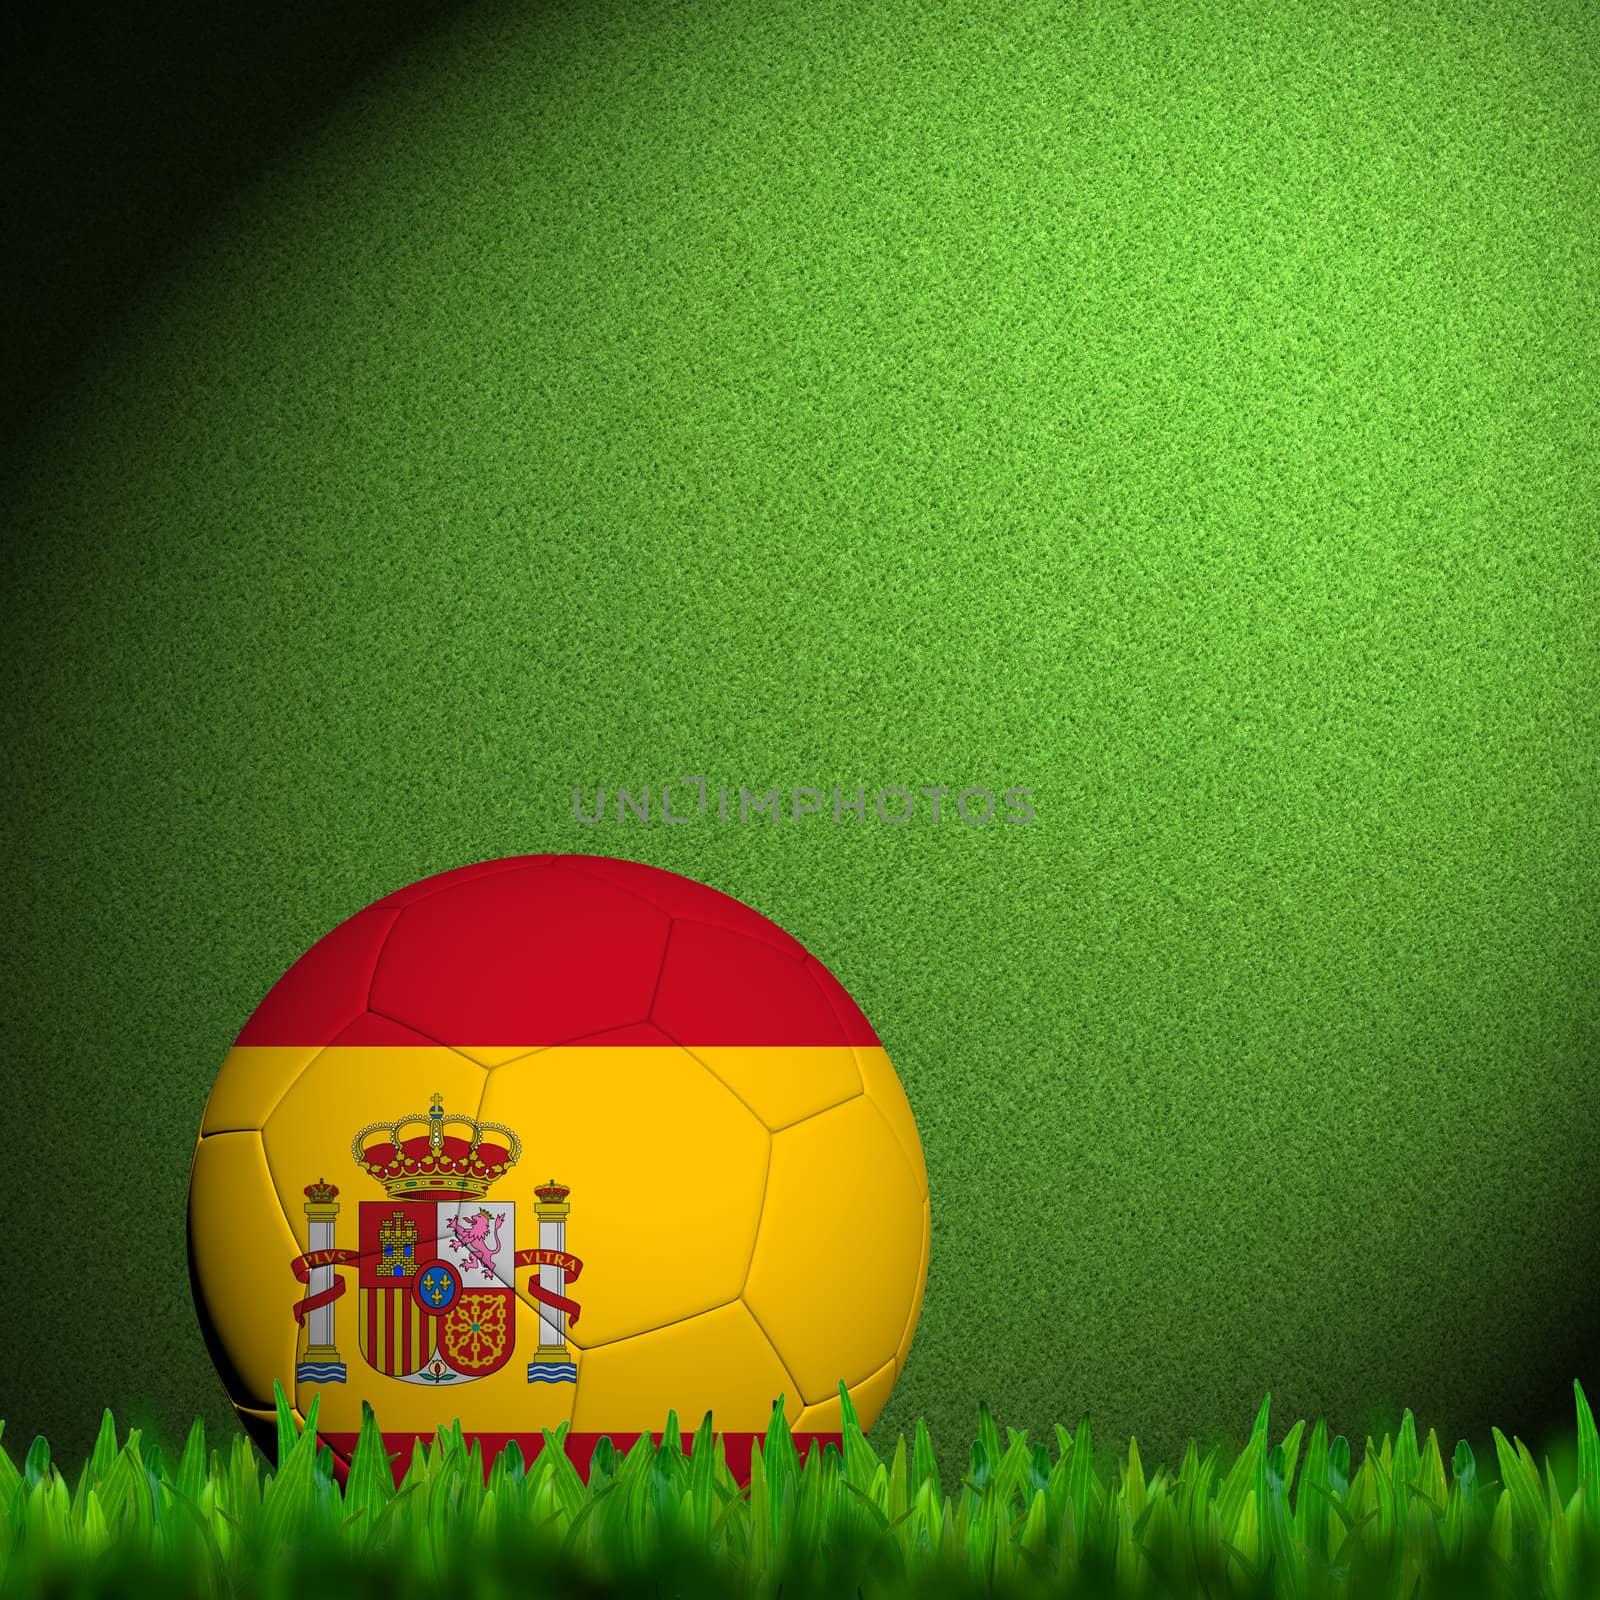 3D Football Spain Flag Patter in green grass 